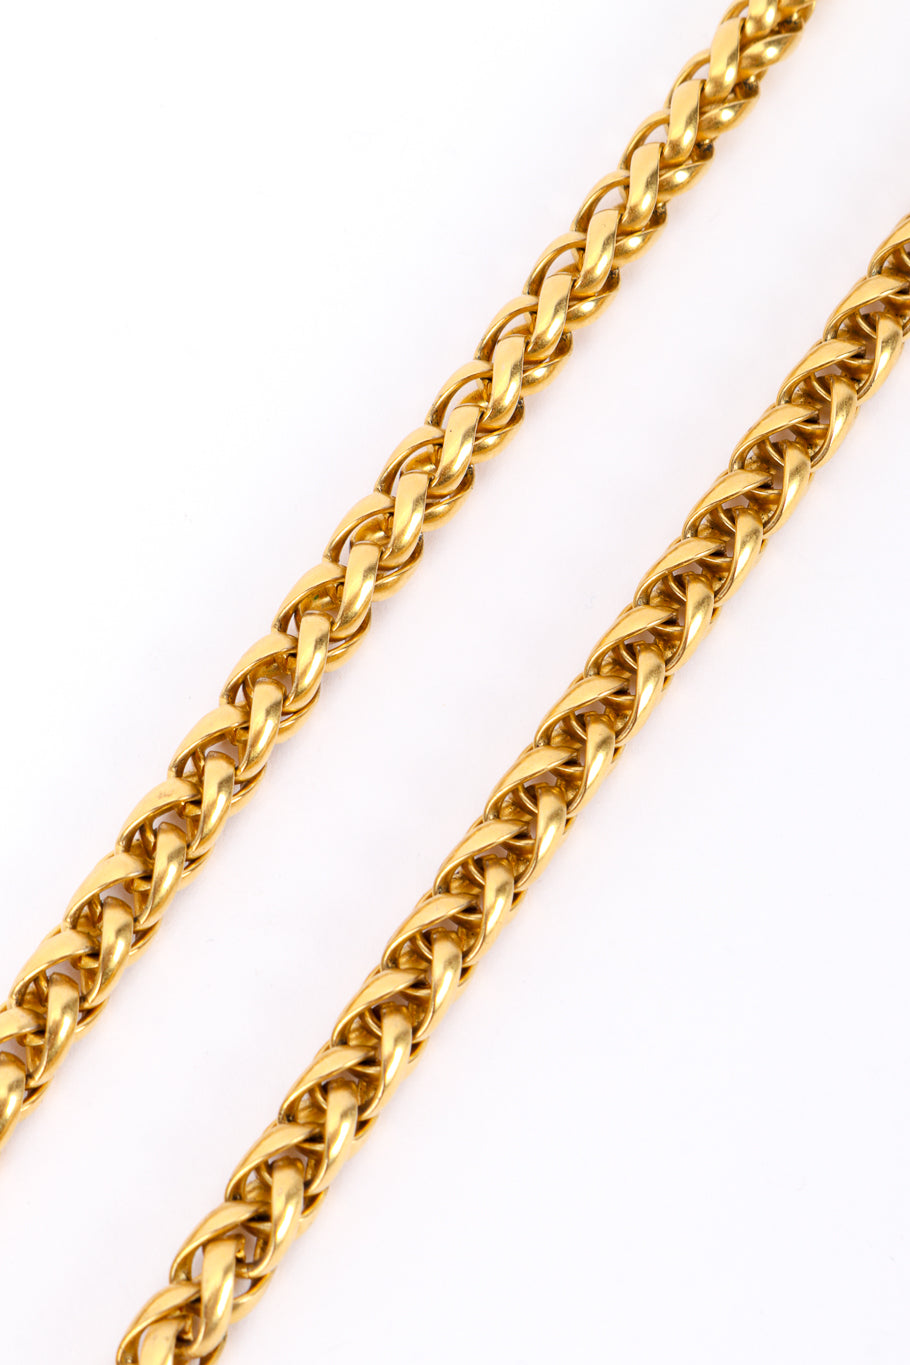 Vintage Givenchy Wheat Chain Necklace chain closeup @recessla